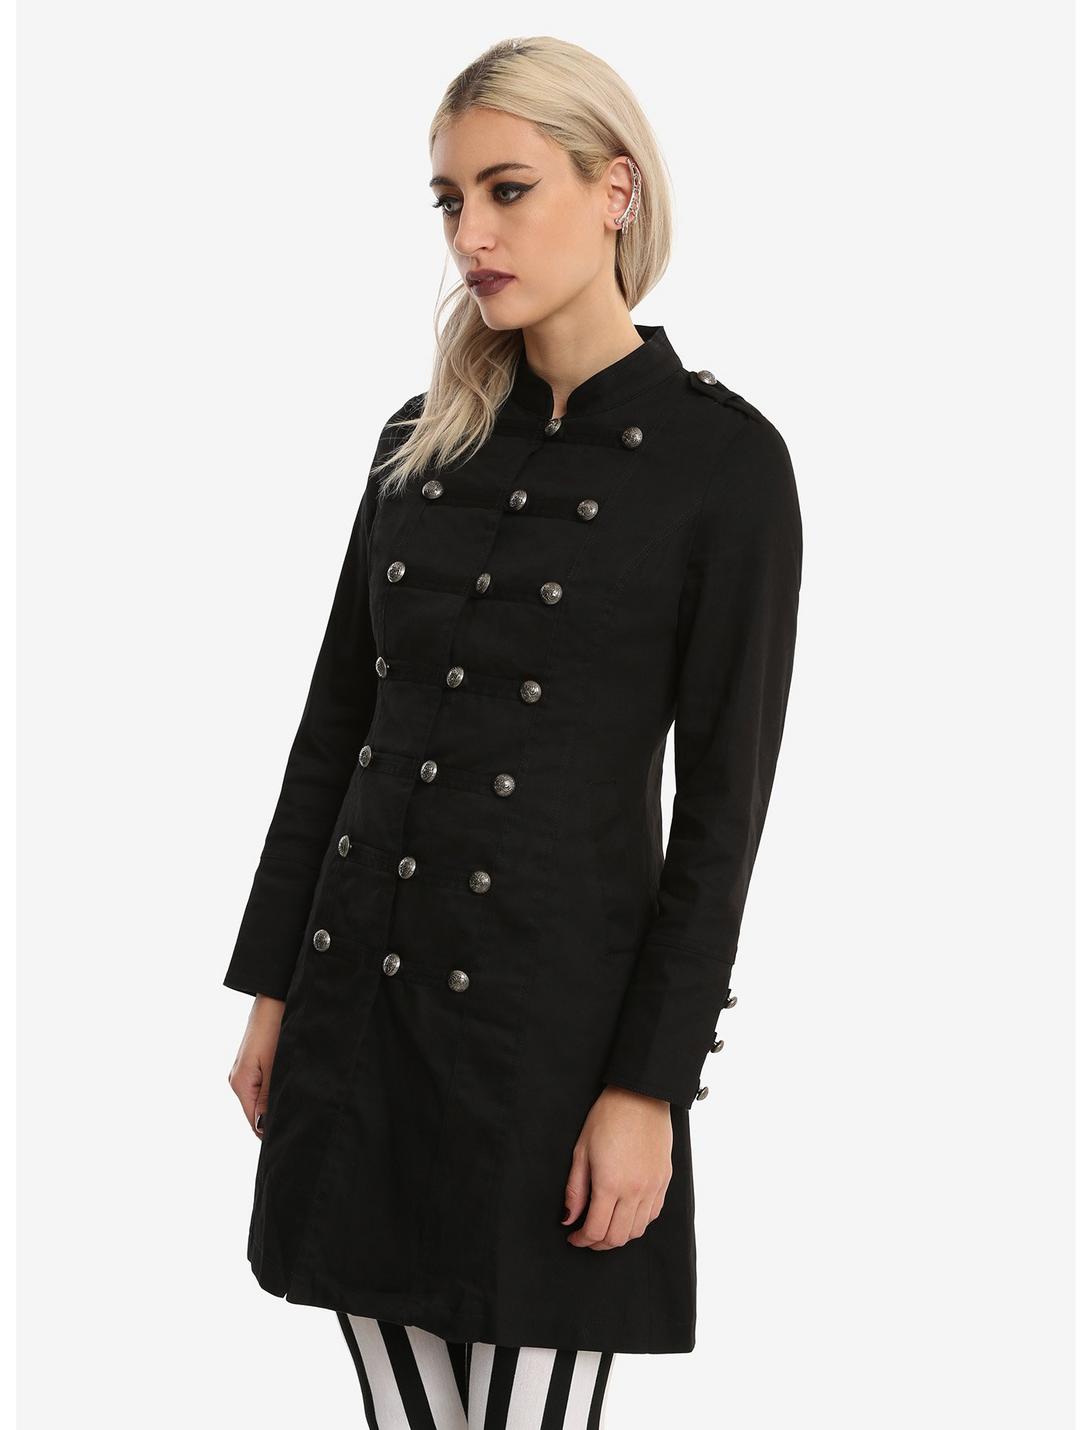 Black Button-Front Military Girls A-Line Jacket, BLACK, hi-res